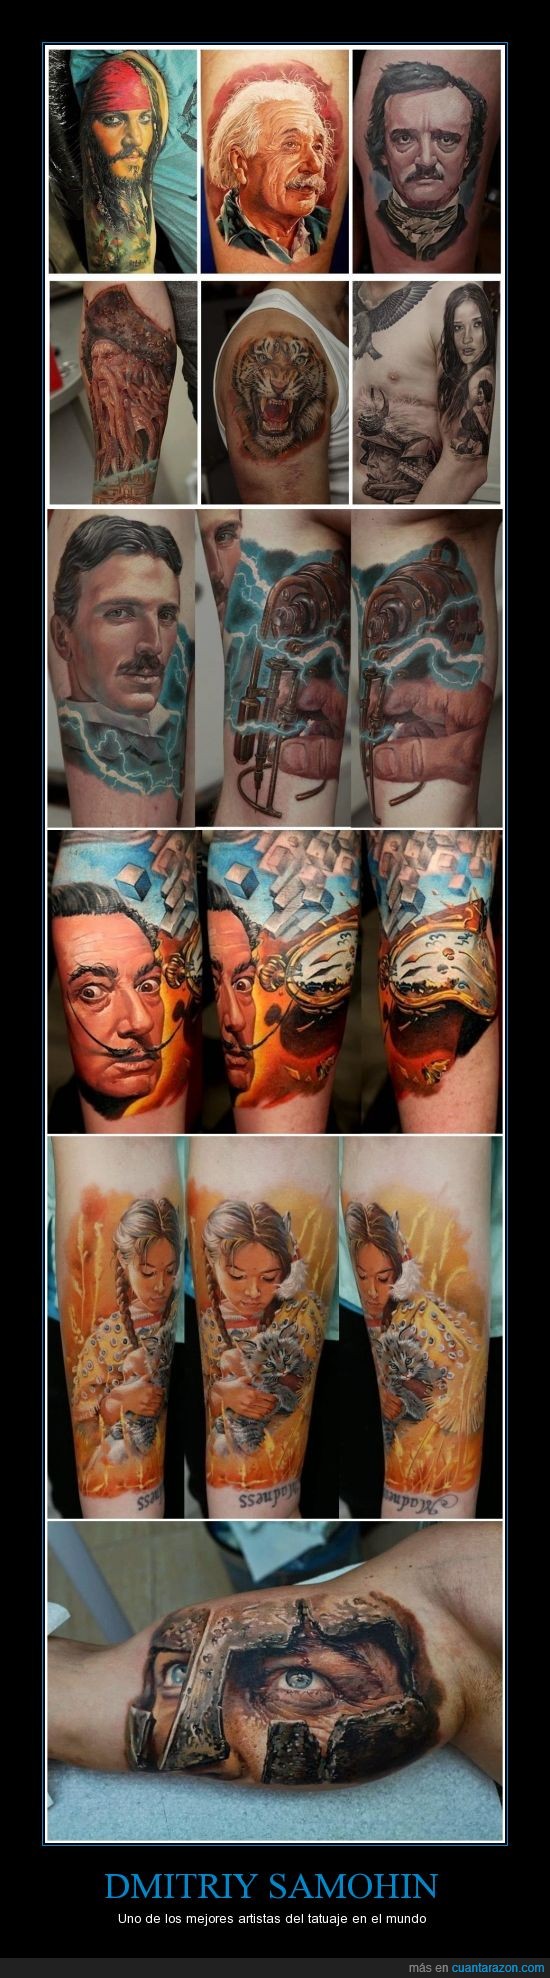 molan,Dmitriy Samohin,tatuajes,realista,300,yelmo,dali,testa